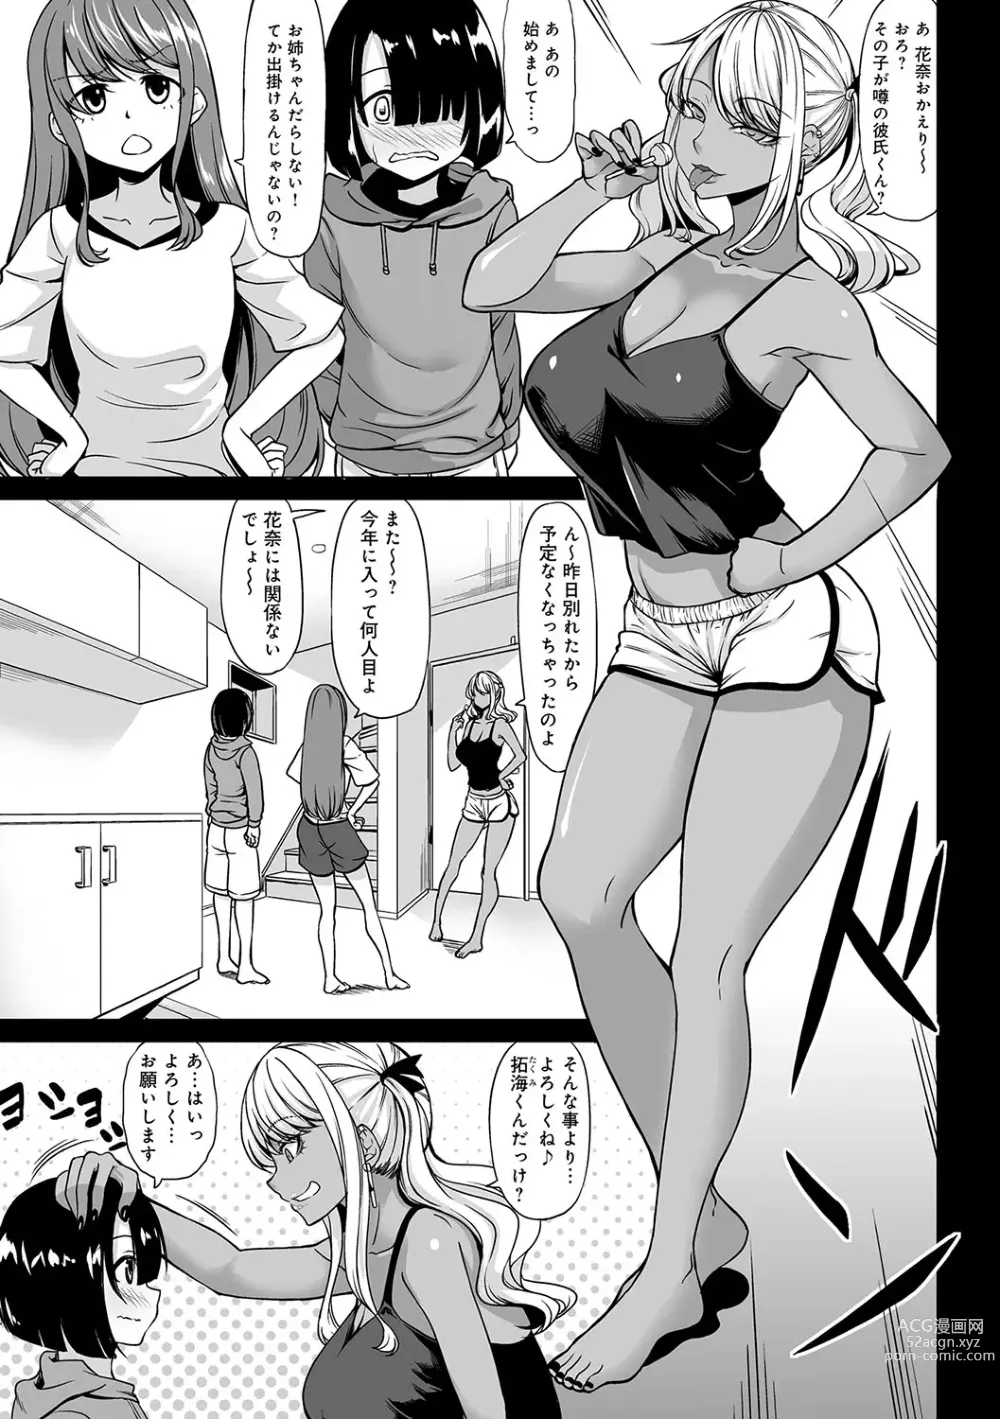 Page 6 of manga A Cup no Kanojo yori J Cup no Kuro Gal no Hou ga Yoi yo ne? - Youd rather have a tanned gal with J-cup boobs than an A-cup girlfriend, wouldn't you?